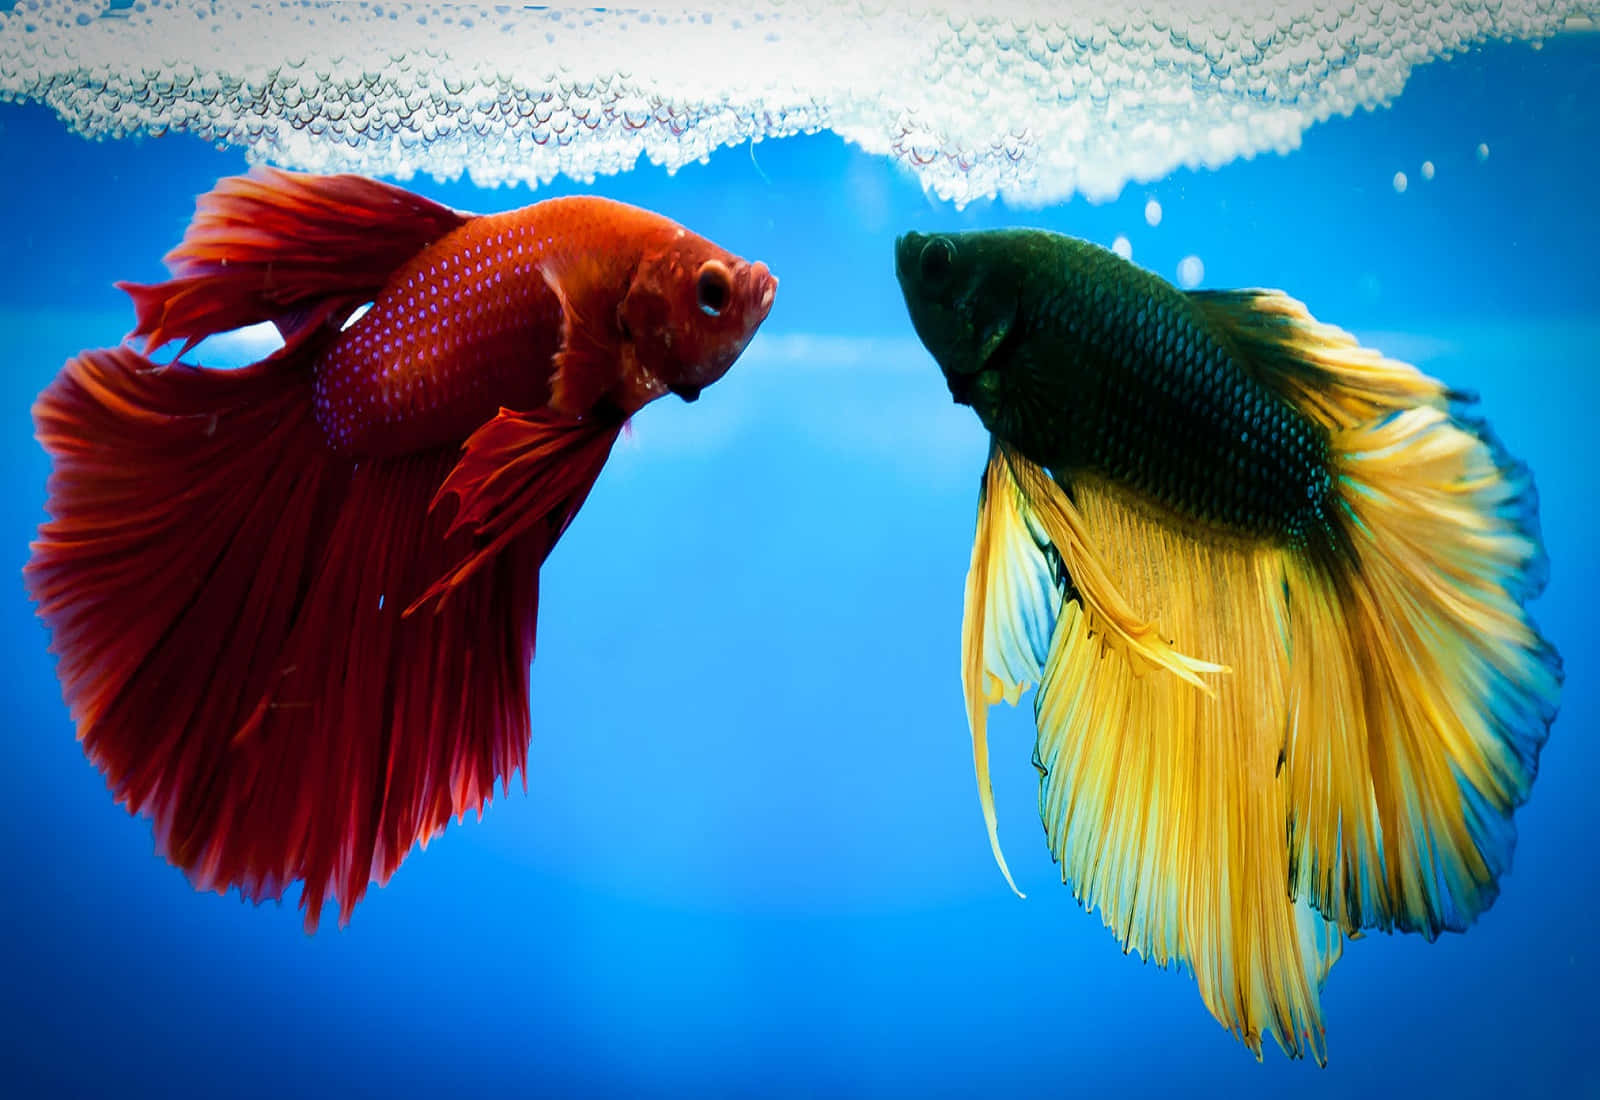 Vibrant Betta Fish Duo.jpg